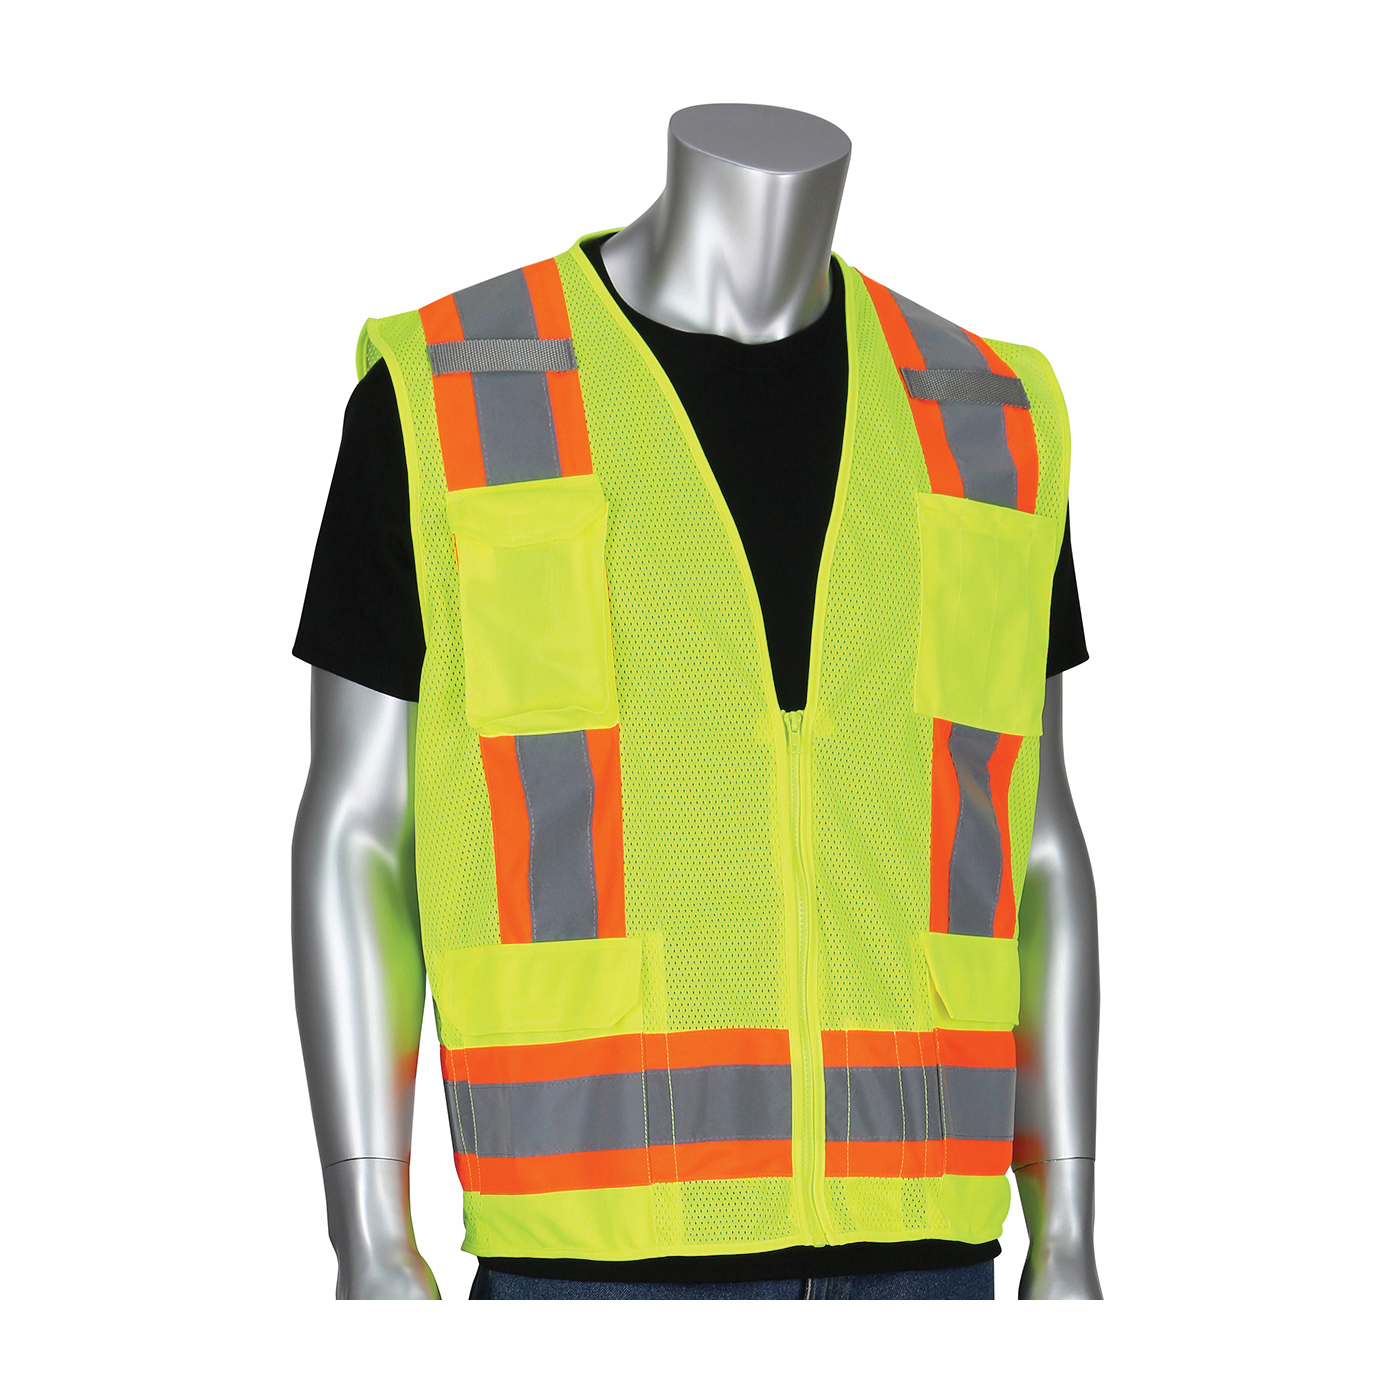 PIP® 302-0500M-LY/3X 2-Tone Surveyor Safety Vest, 3XL, Hi-Viz Lime Yellow, Polyester, Zipper Closure, 11 Pockets, ANSI Class: Class 2, Specifications Met: ANSI 107 Type R